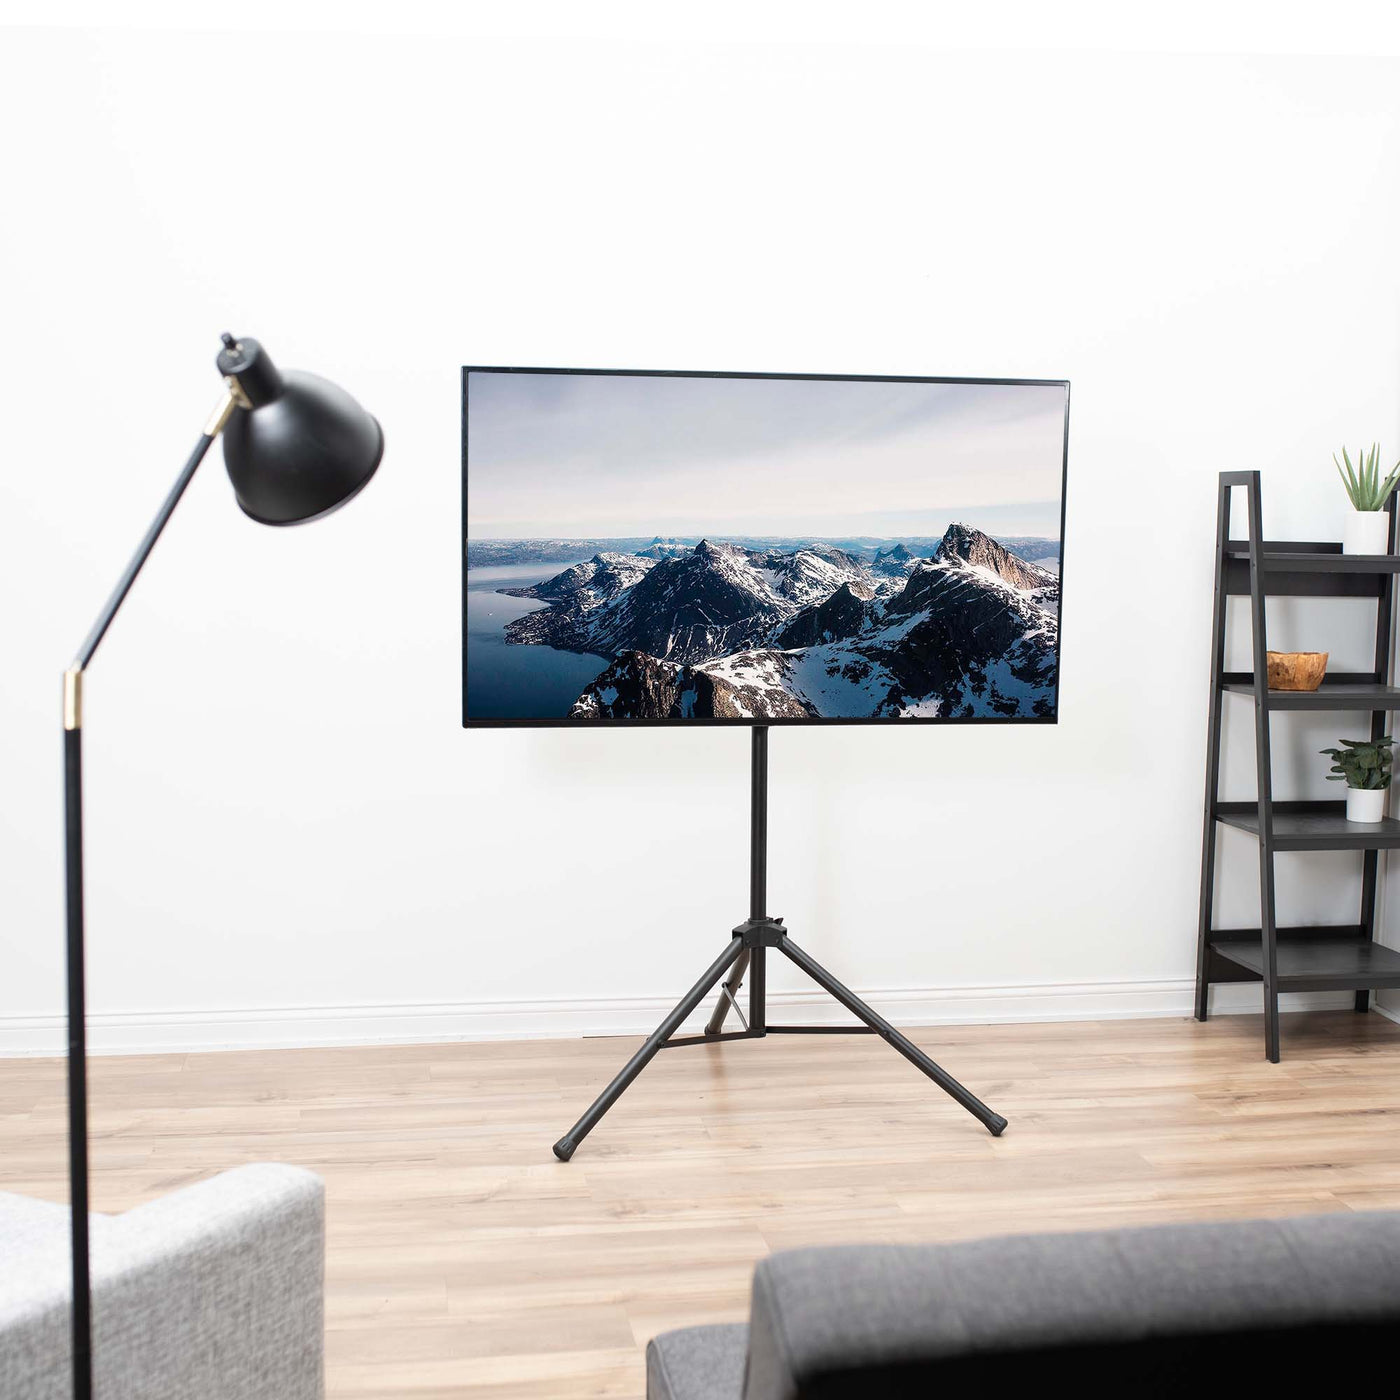 vivo White Tripod 32 to 55 TV Display Floor Stand Height Adjustable Mount